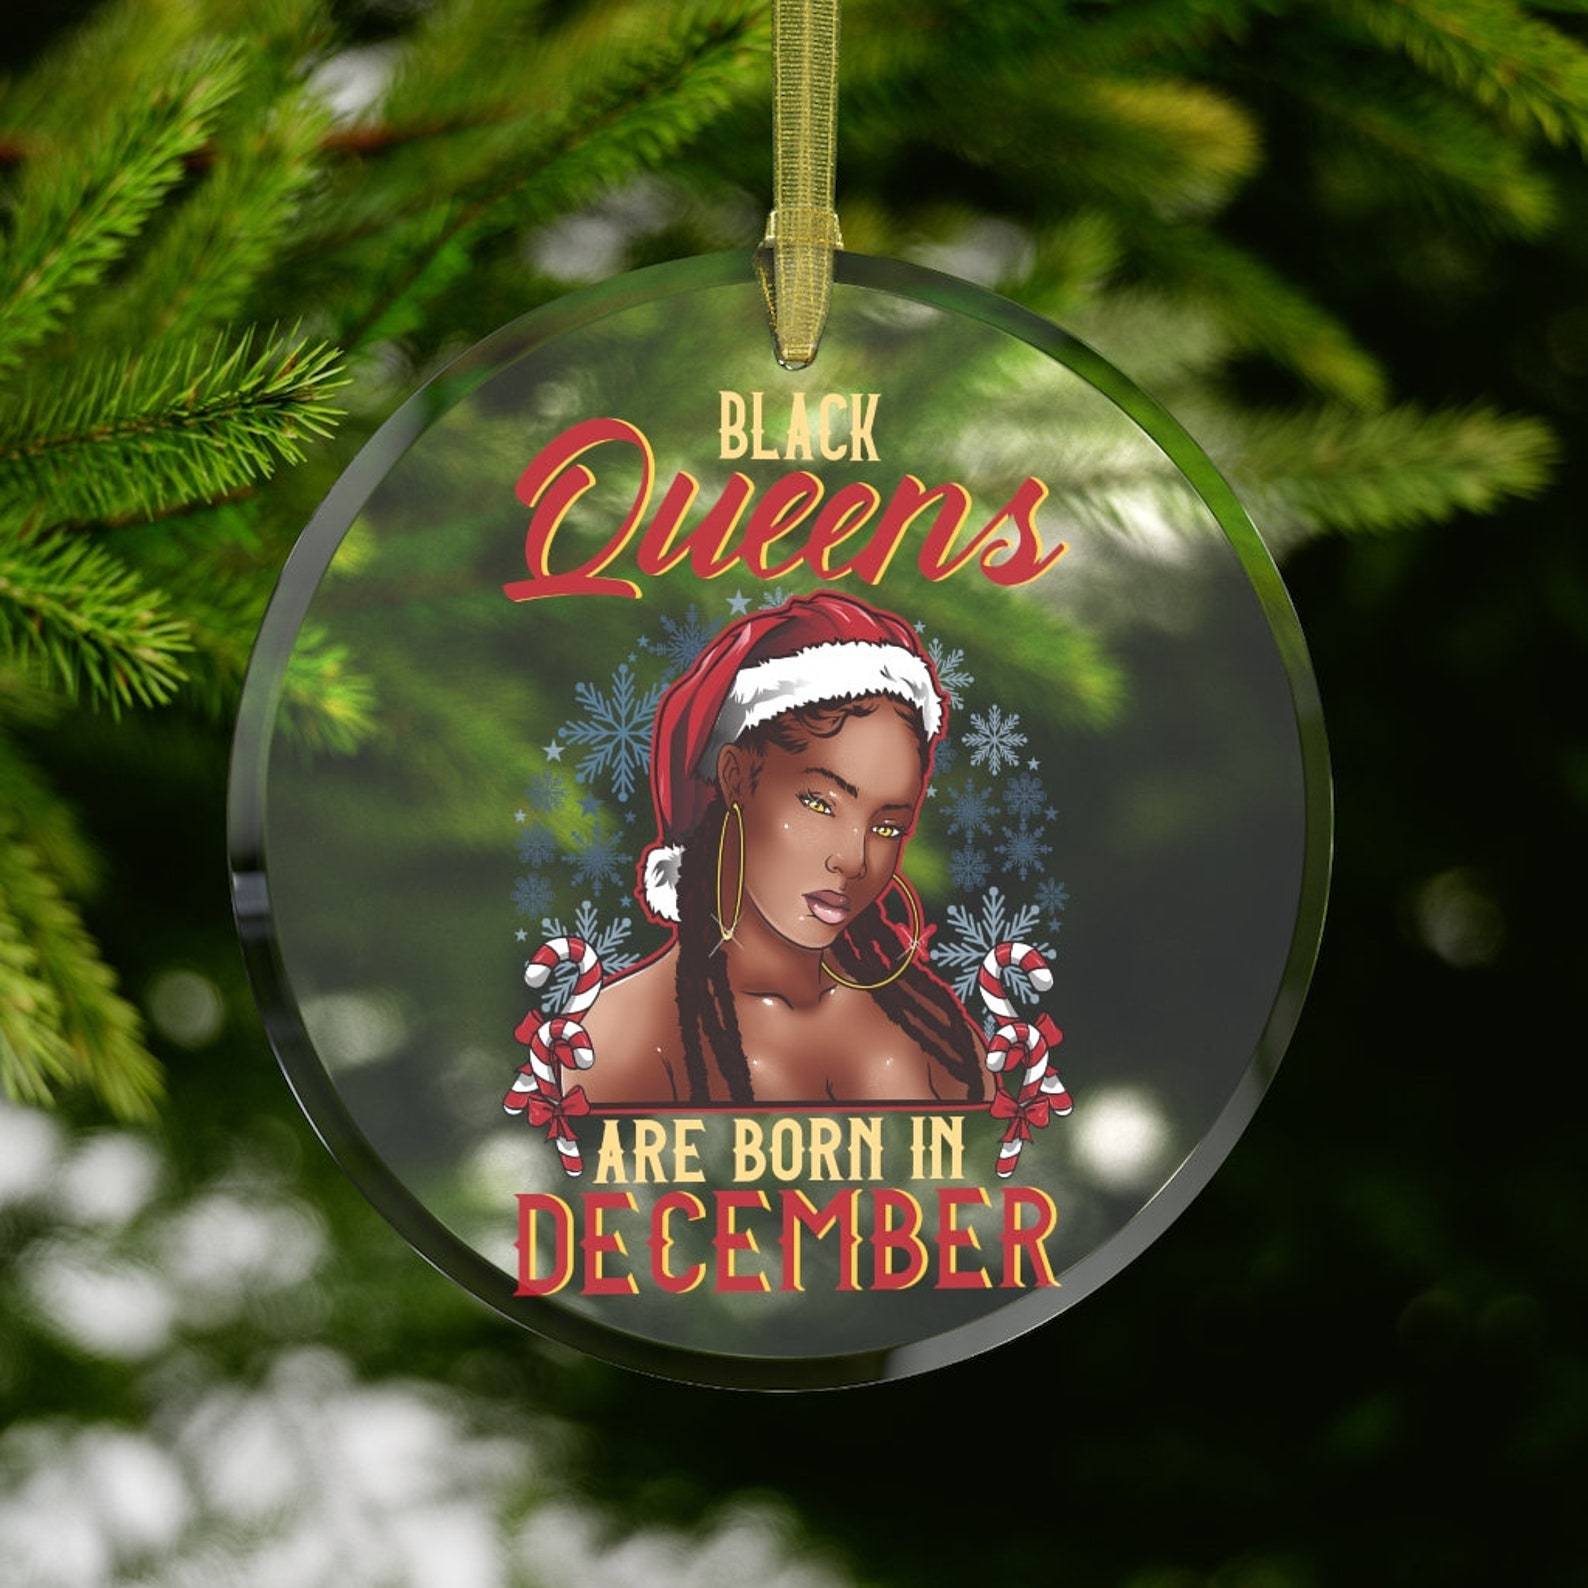 December Birthday Queen Black Girl Black Woman Gifts Black Womencandy Cane Santa Hat Christmas Ornament